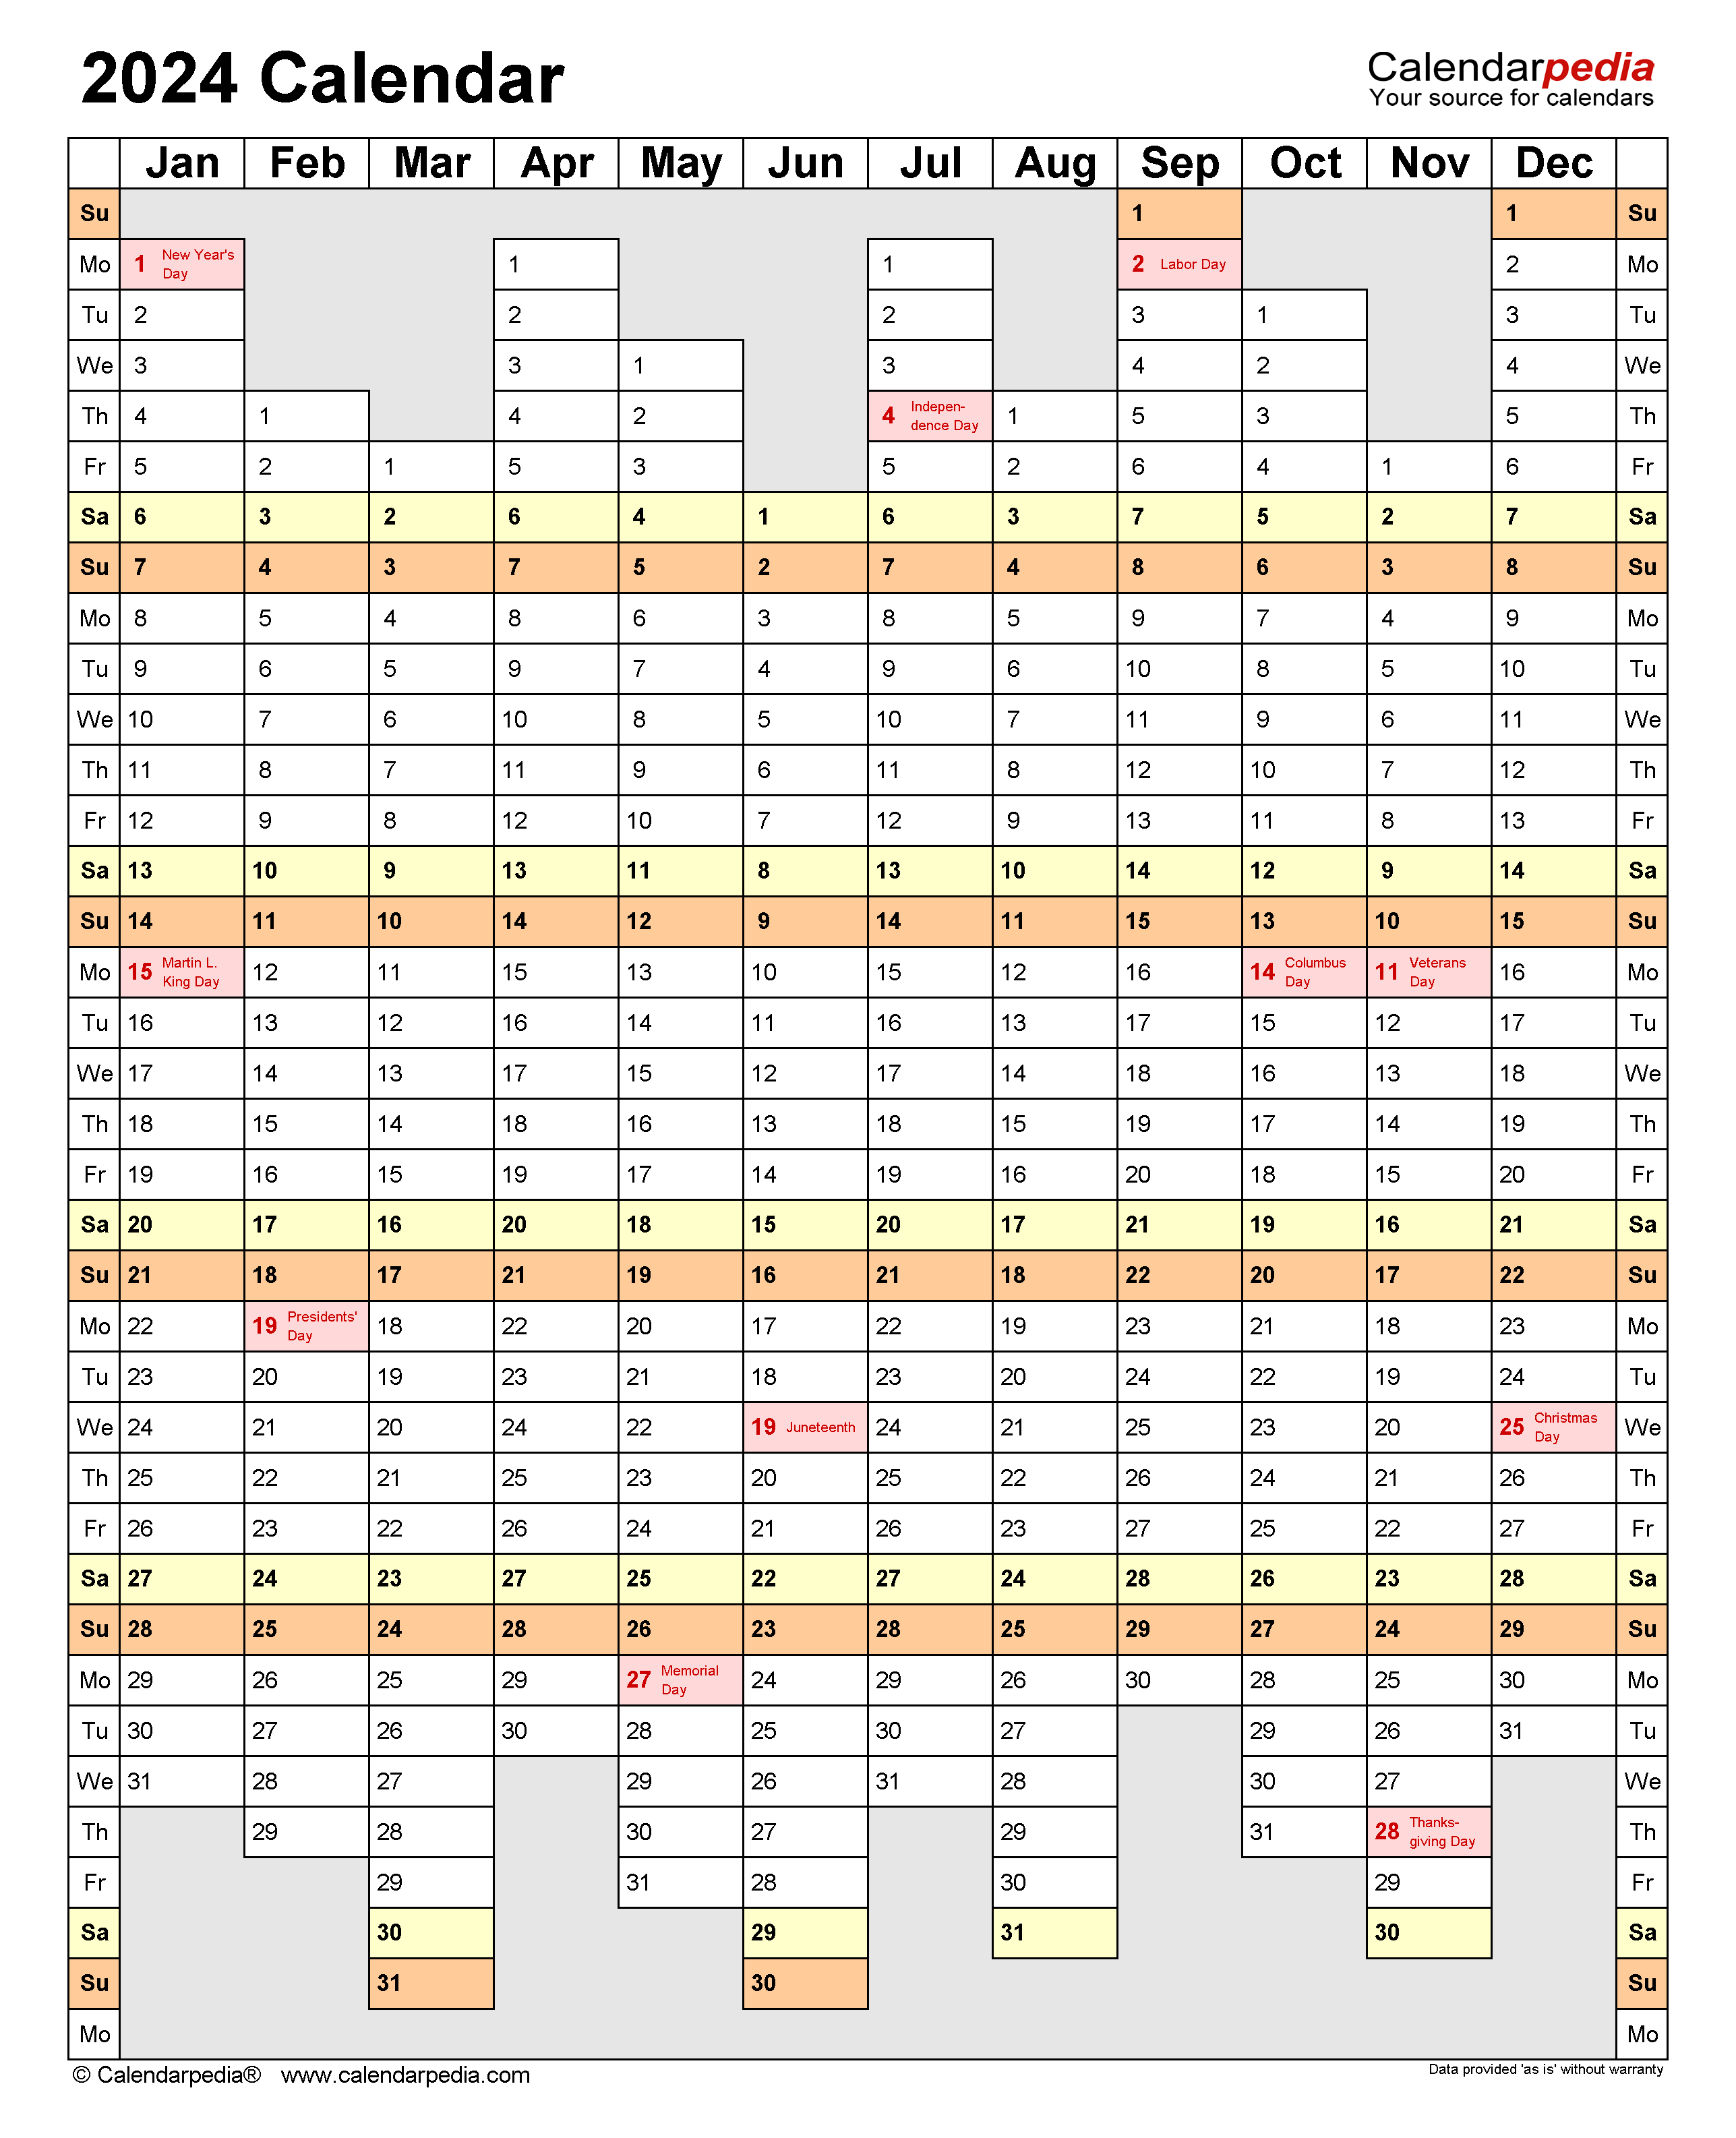 2024 Calendar Template Excel Free Download Calendar 2024 All Holidays - Free Printable 2024 Calendar Template Excel